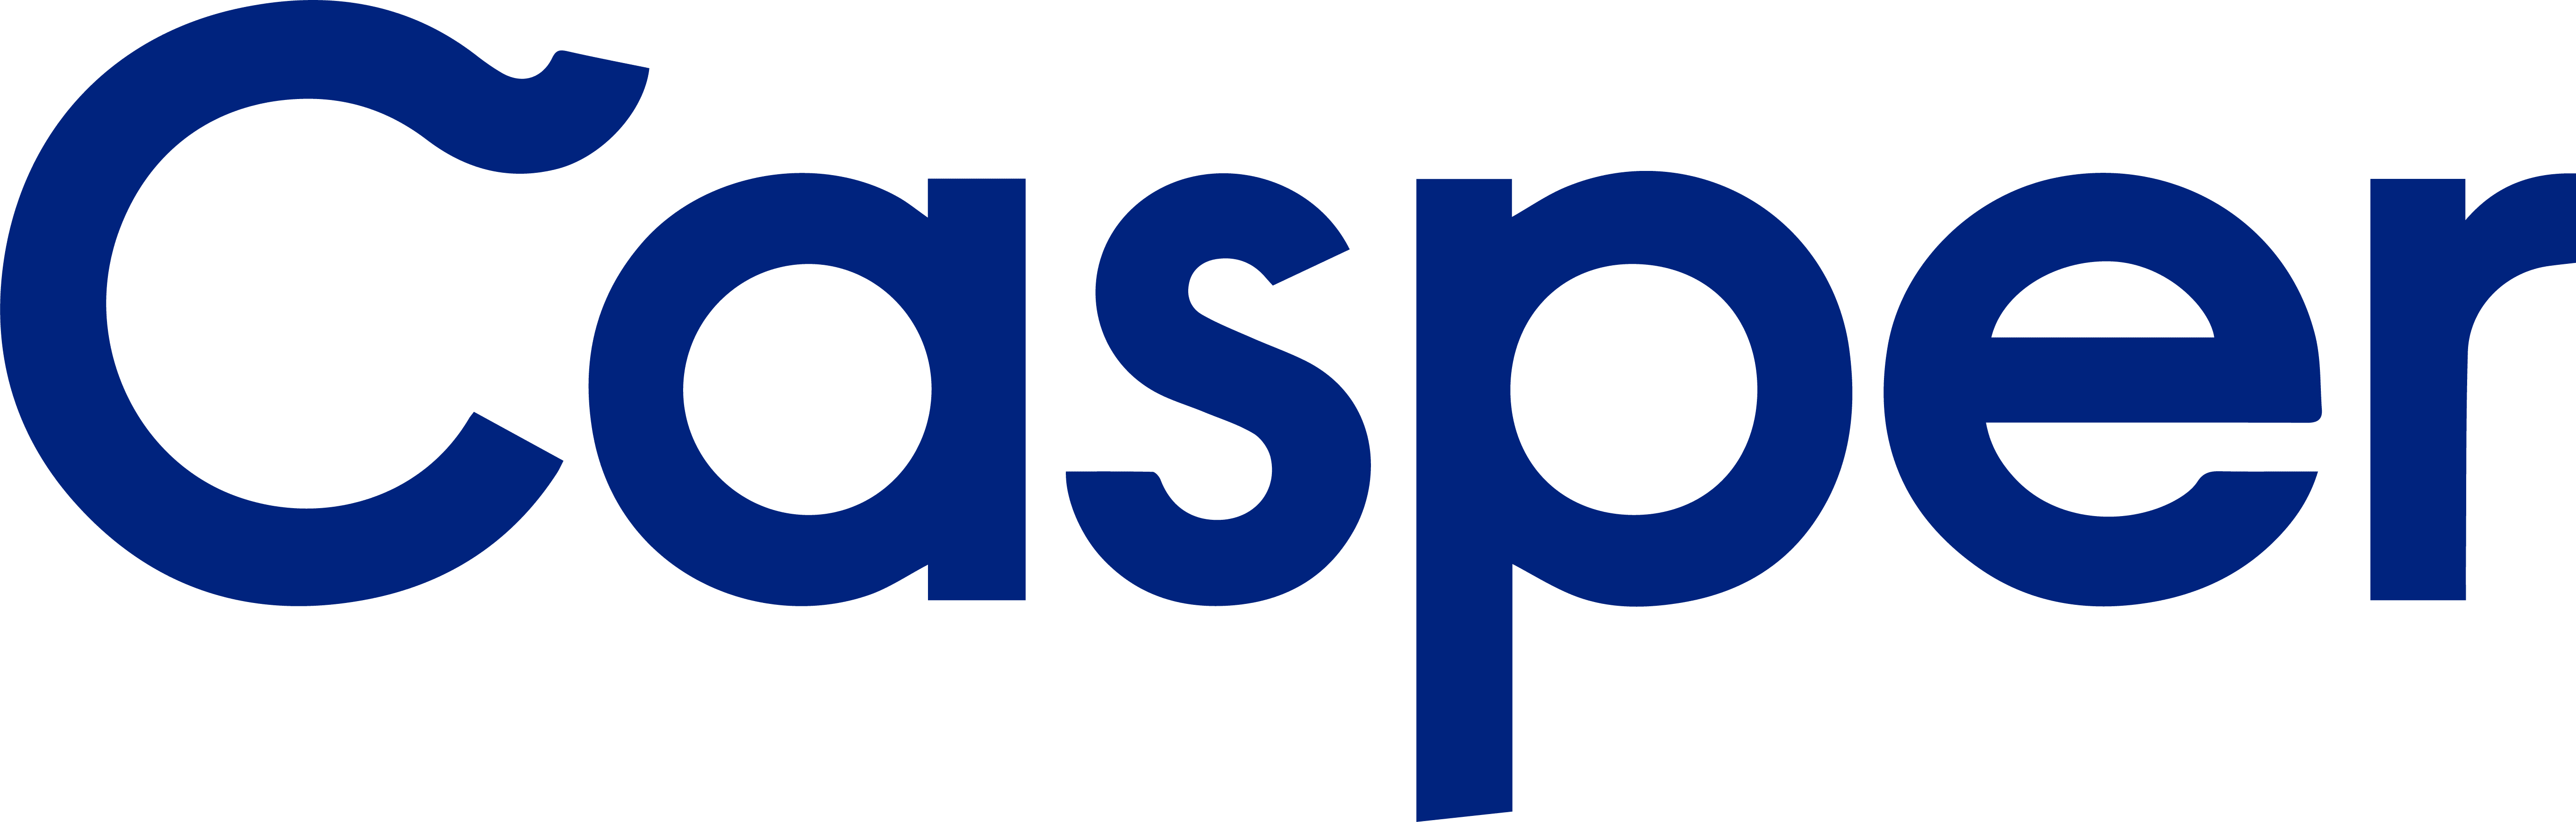 Casper Logo - Casper Mattress Logo Clipart (5513x1760), Png Download